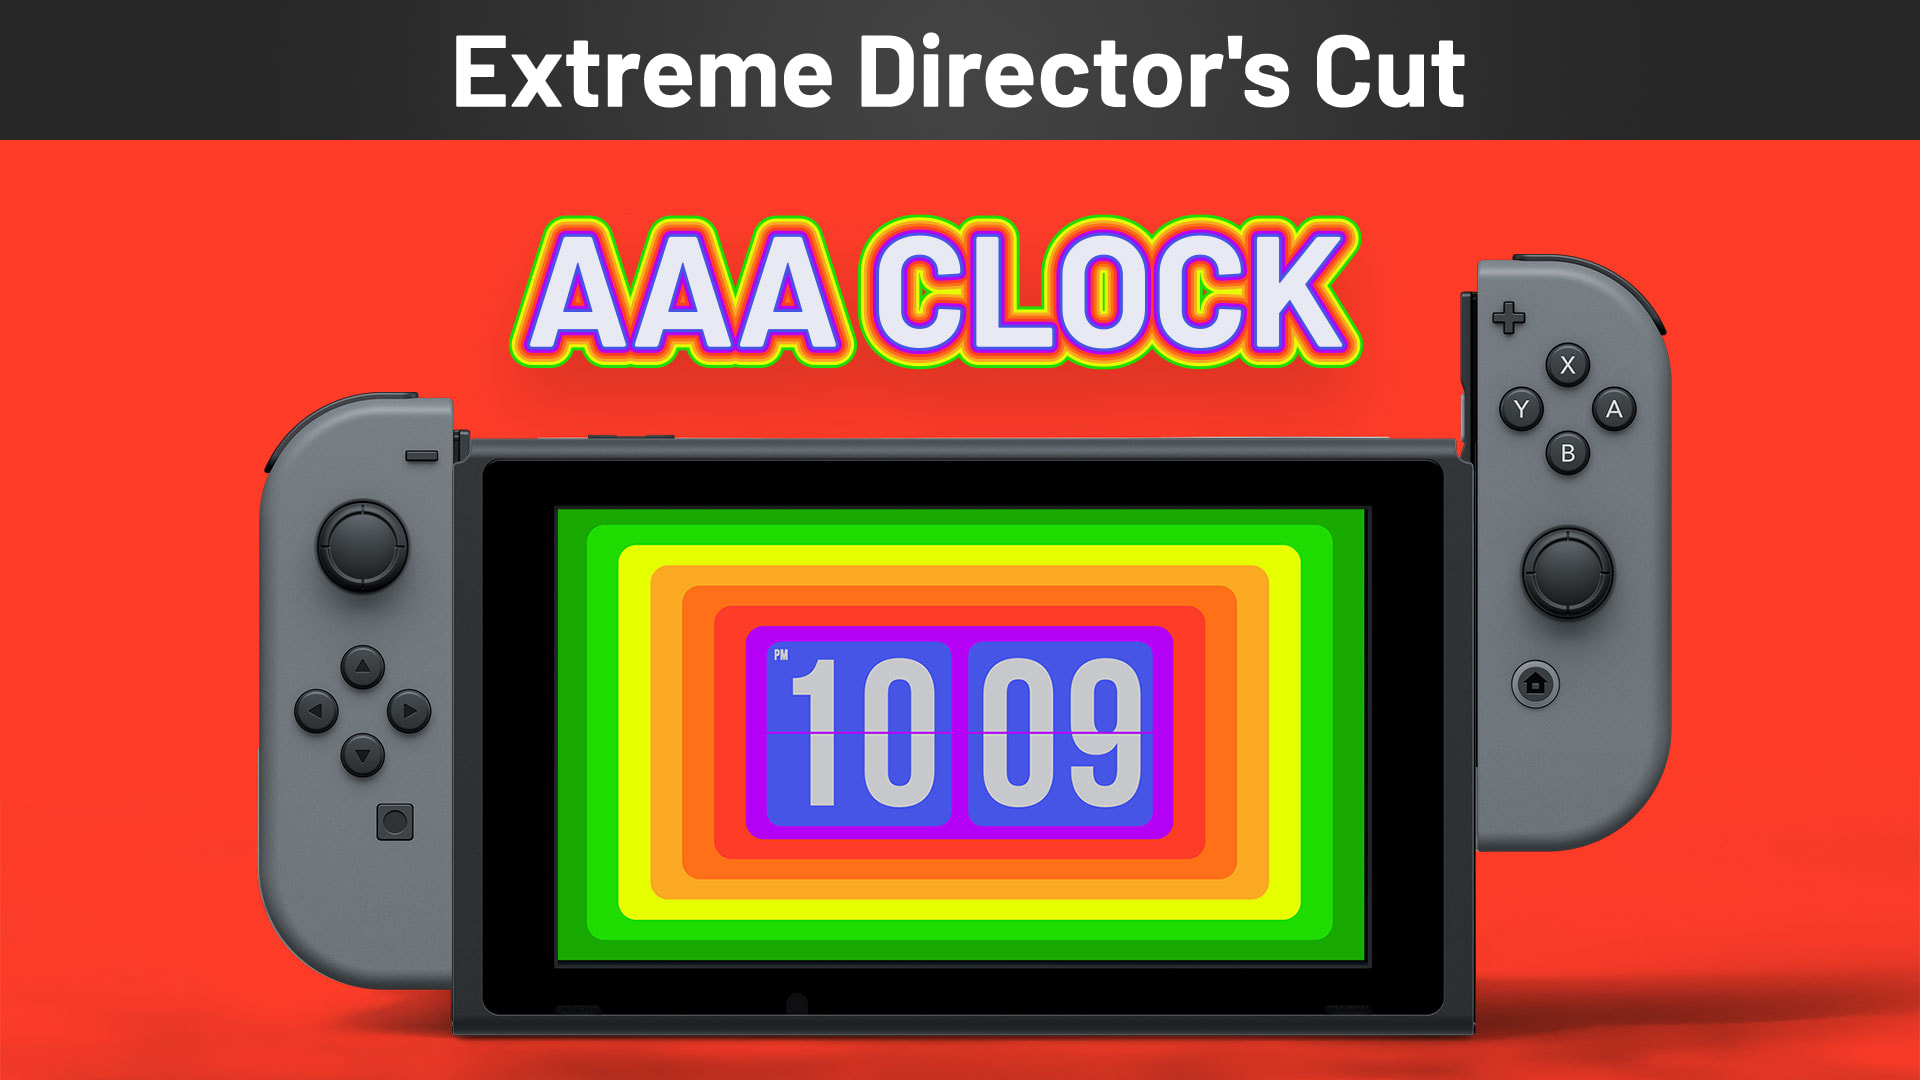 AAA Clock Extreme Director's Cut